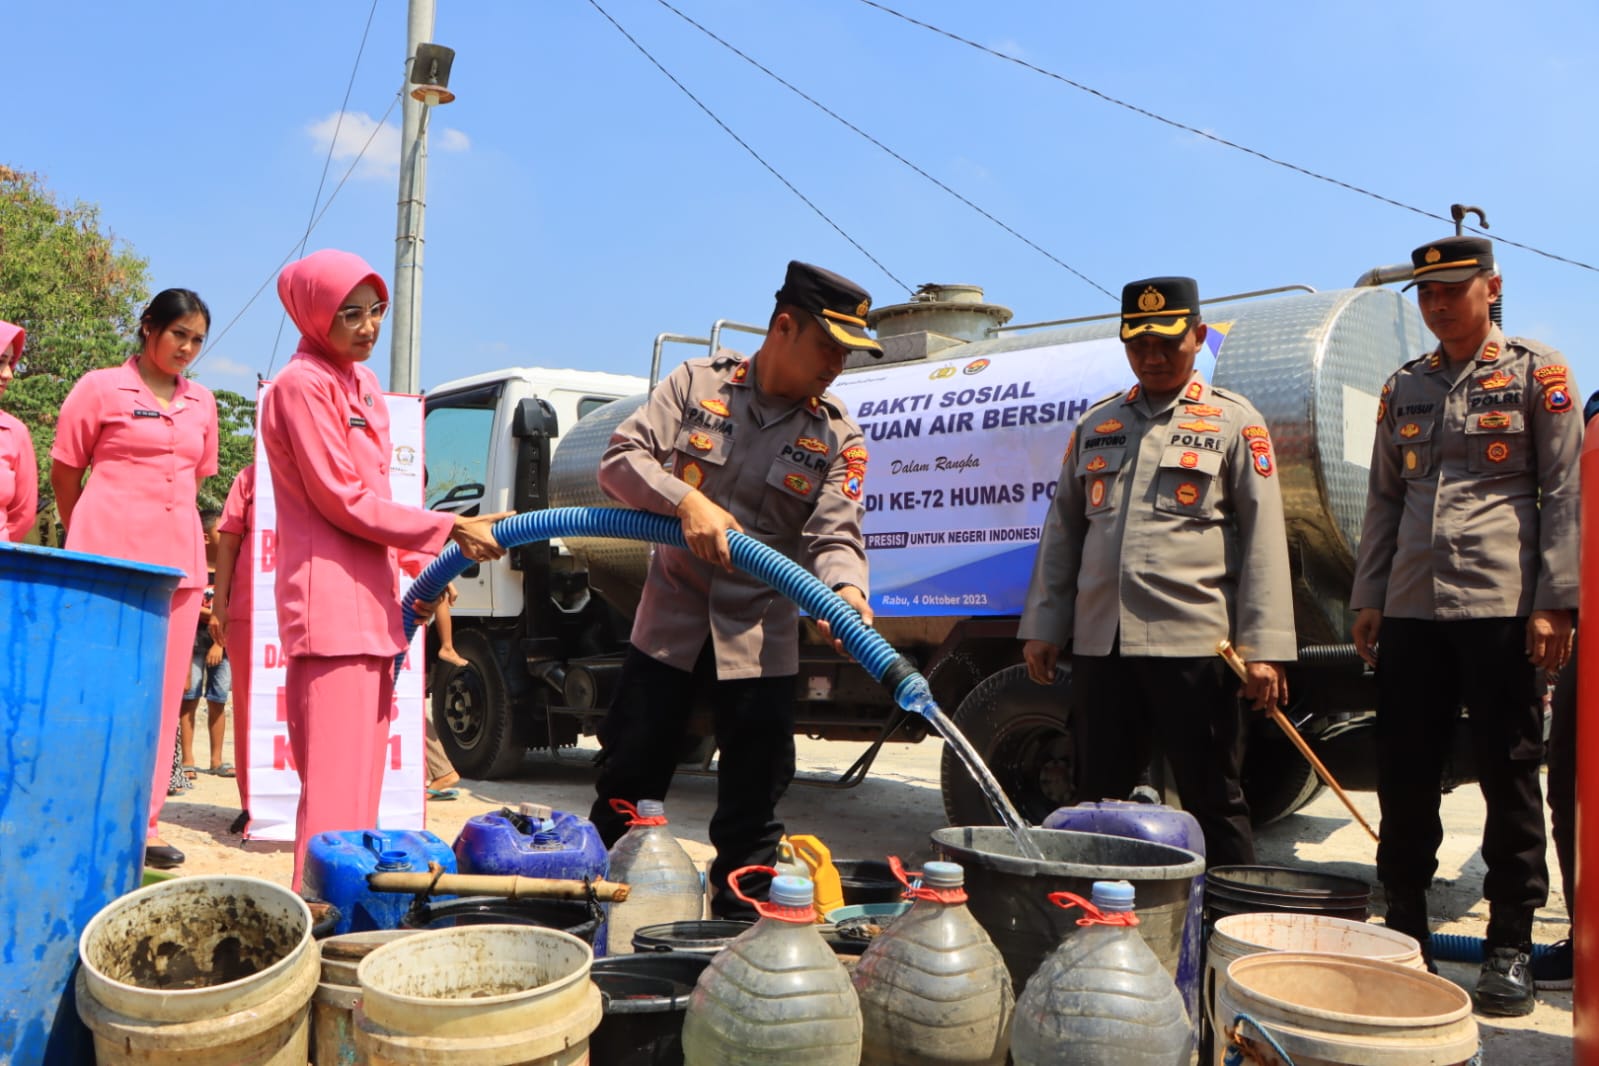 HUT Ke-72 Humas Polri, Polres Tuban Bagikan 25 Ribu Liter Air Bersih